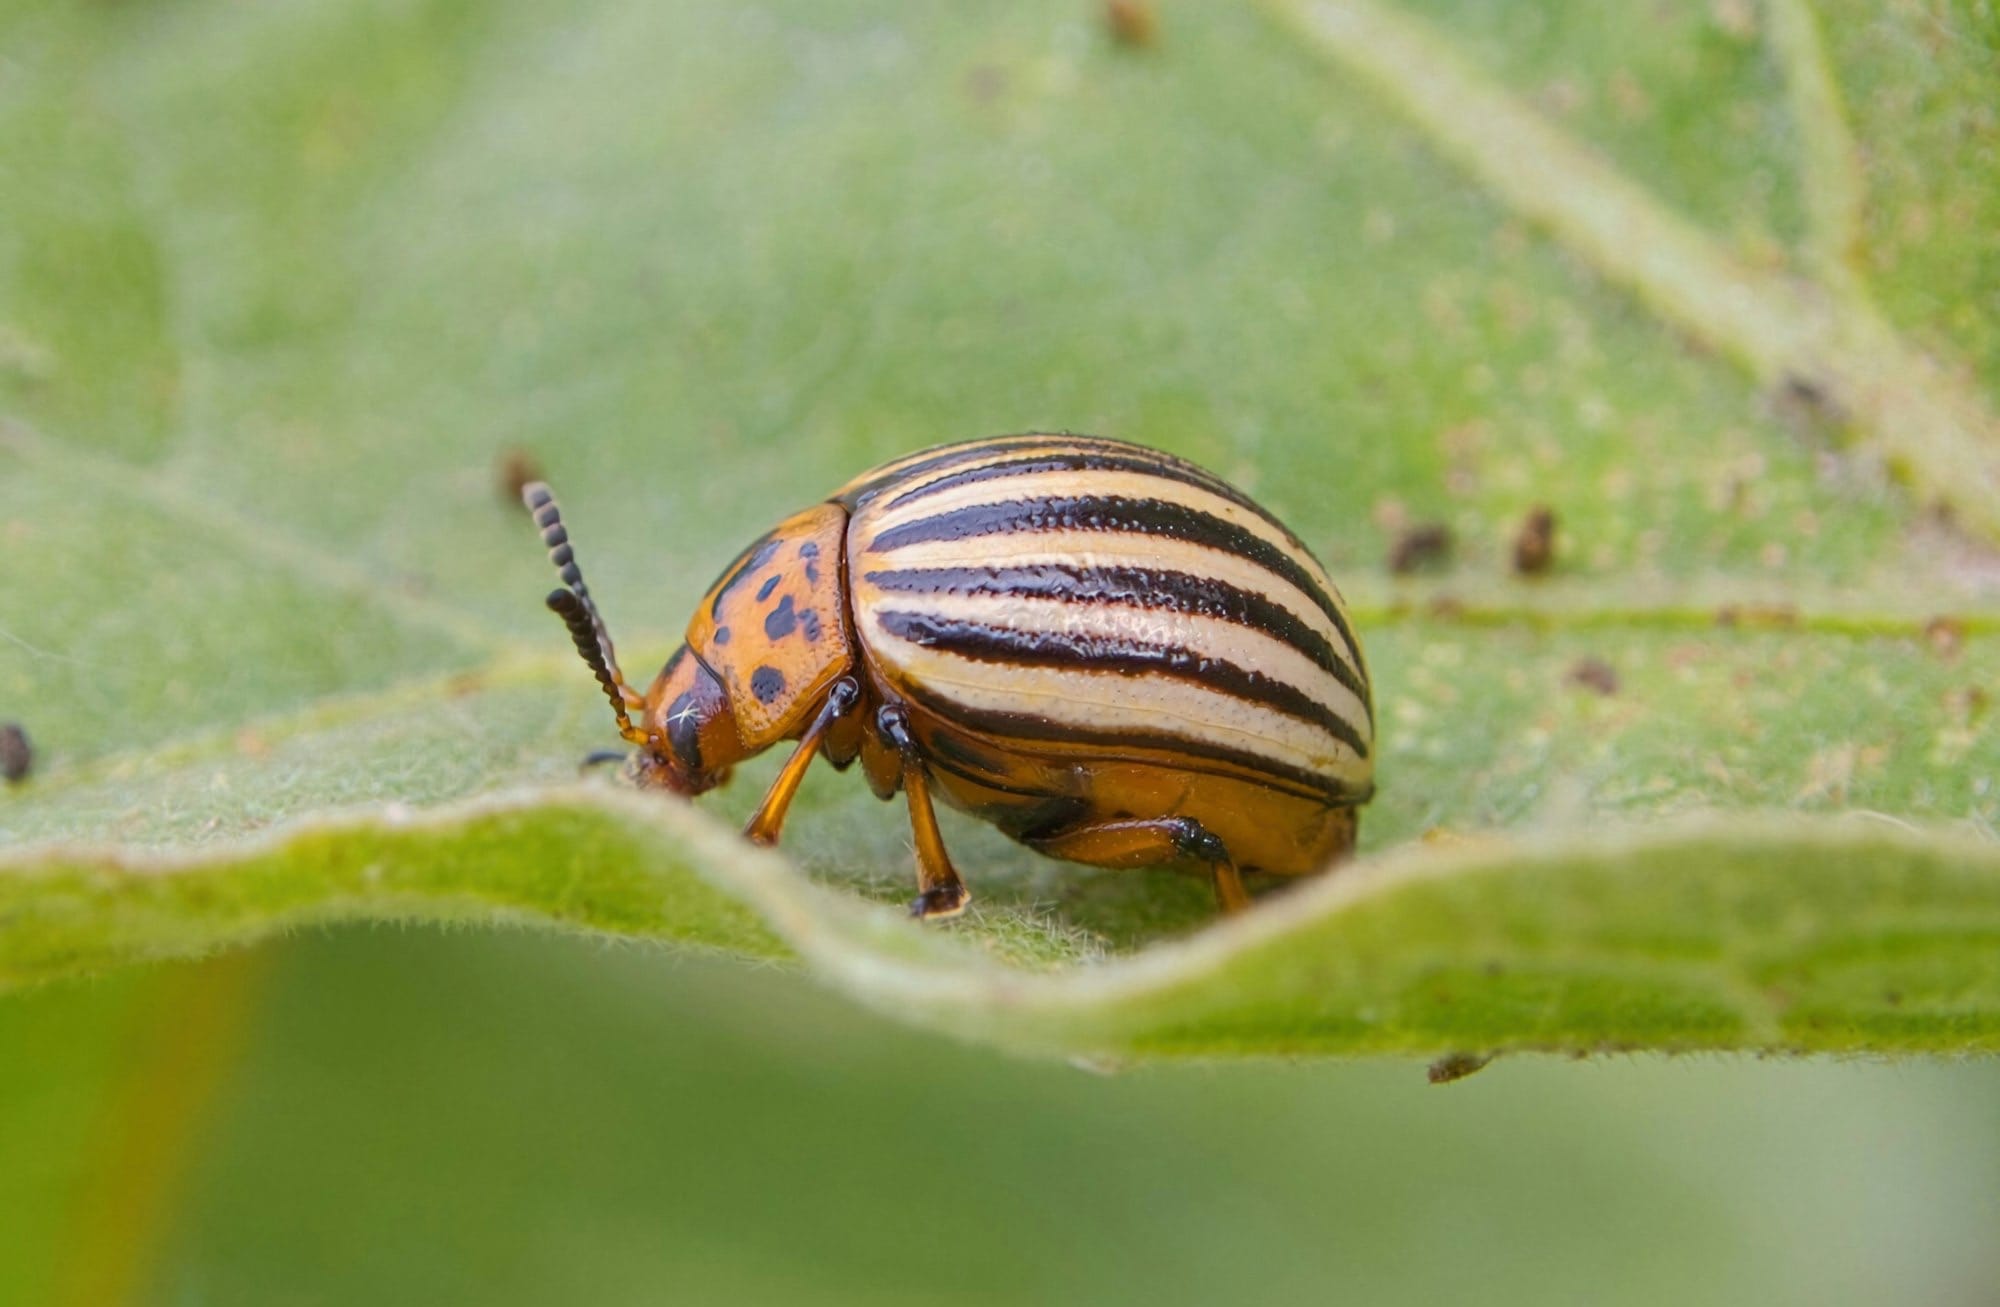 a striped bug sitting on top of a green leaf